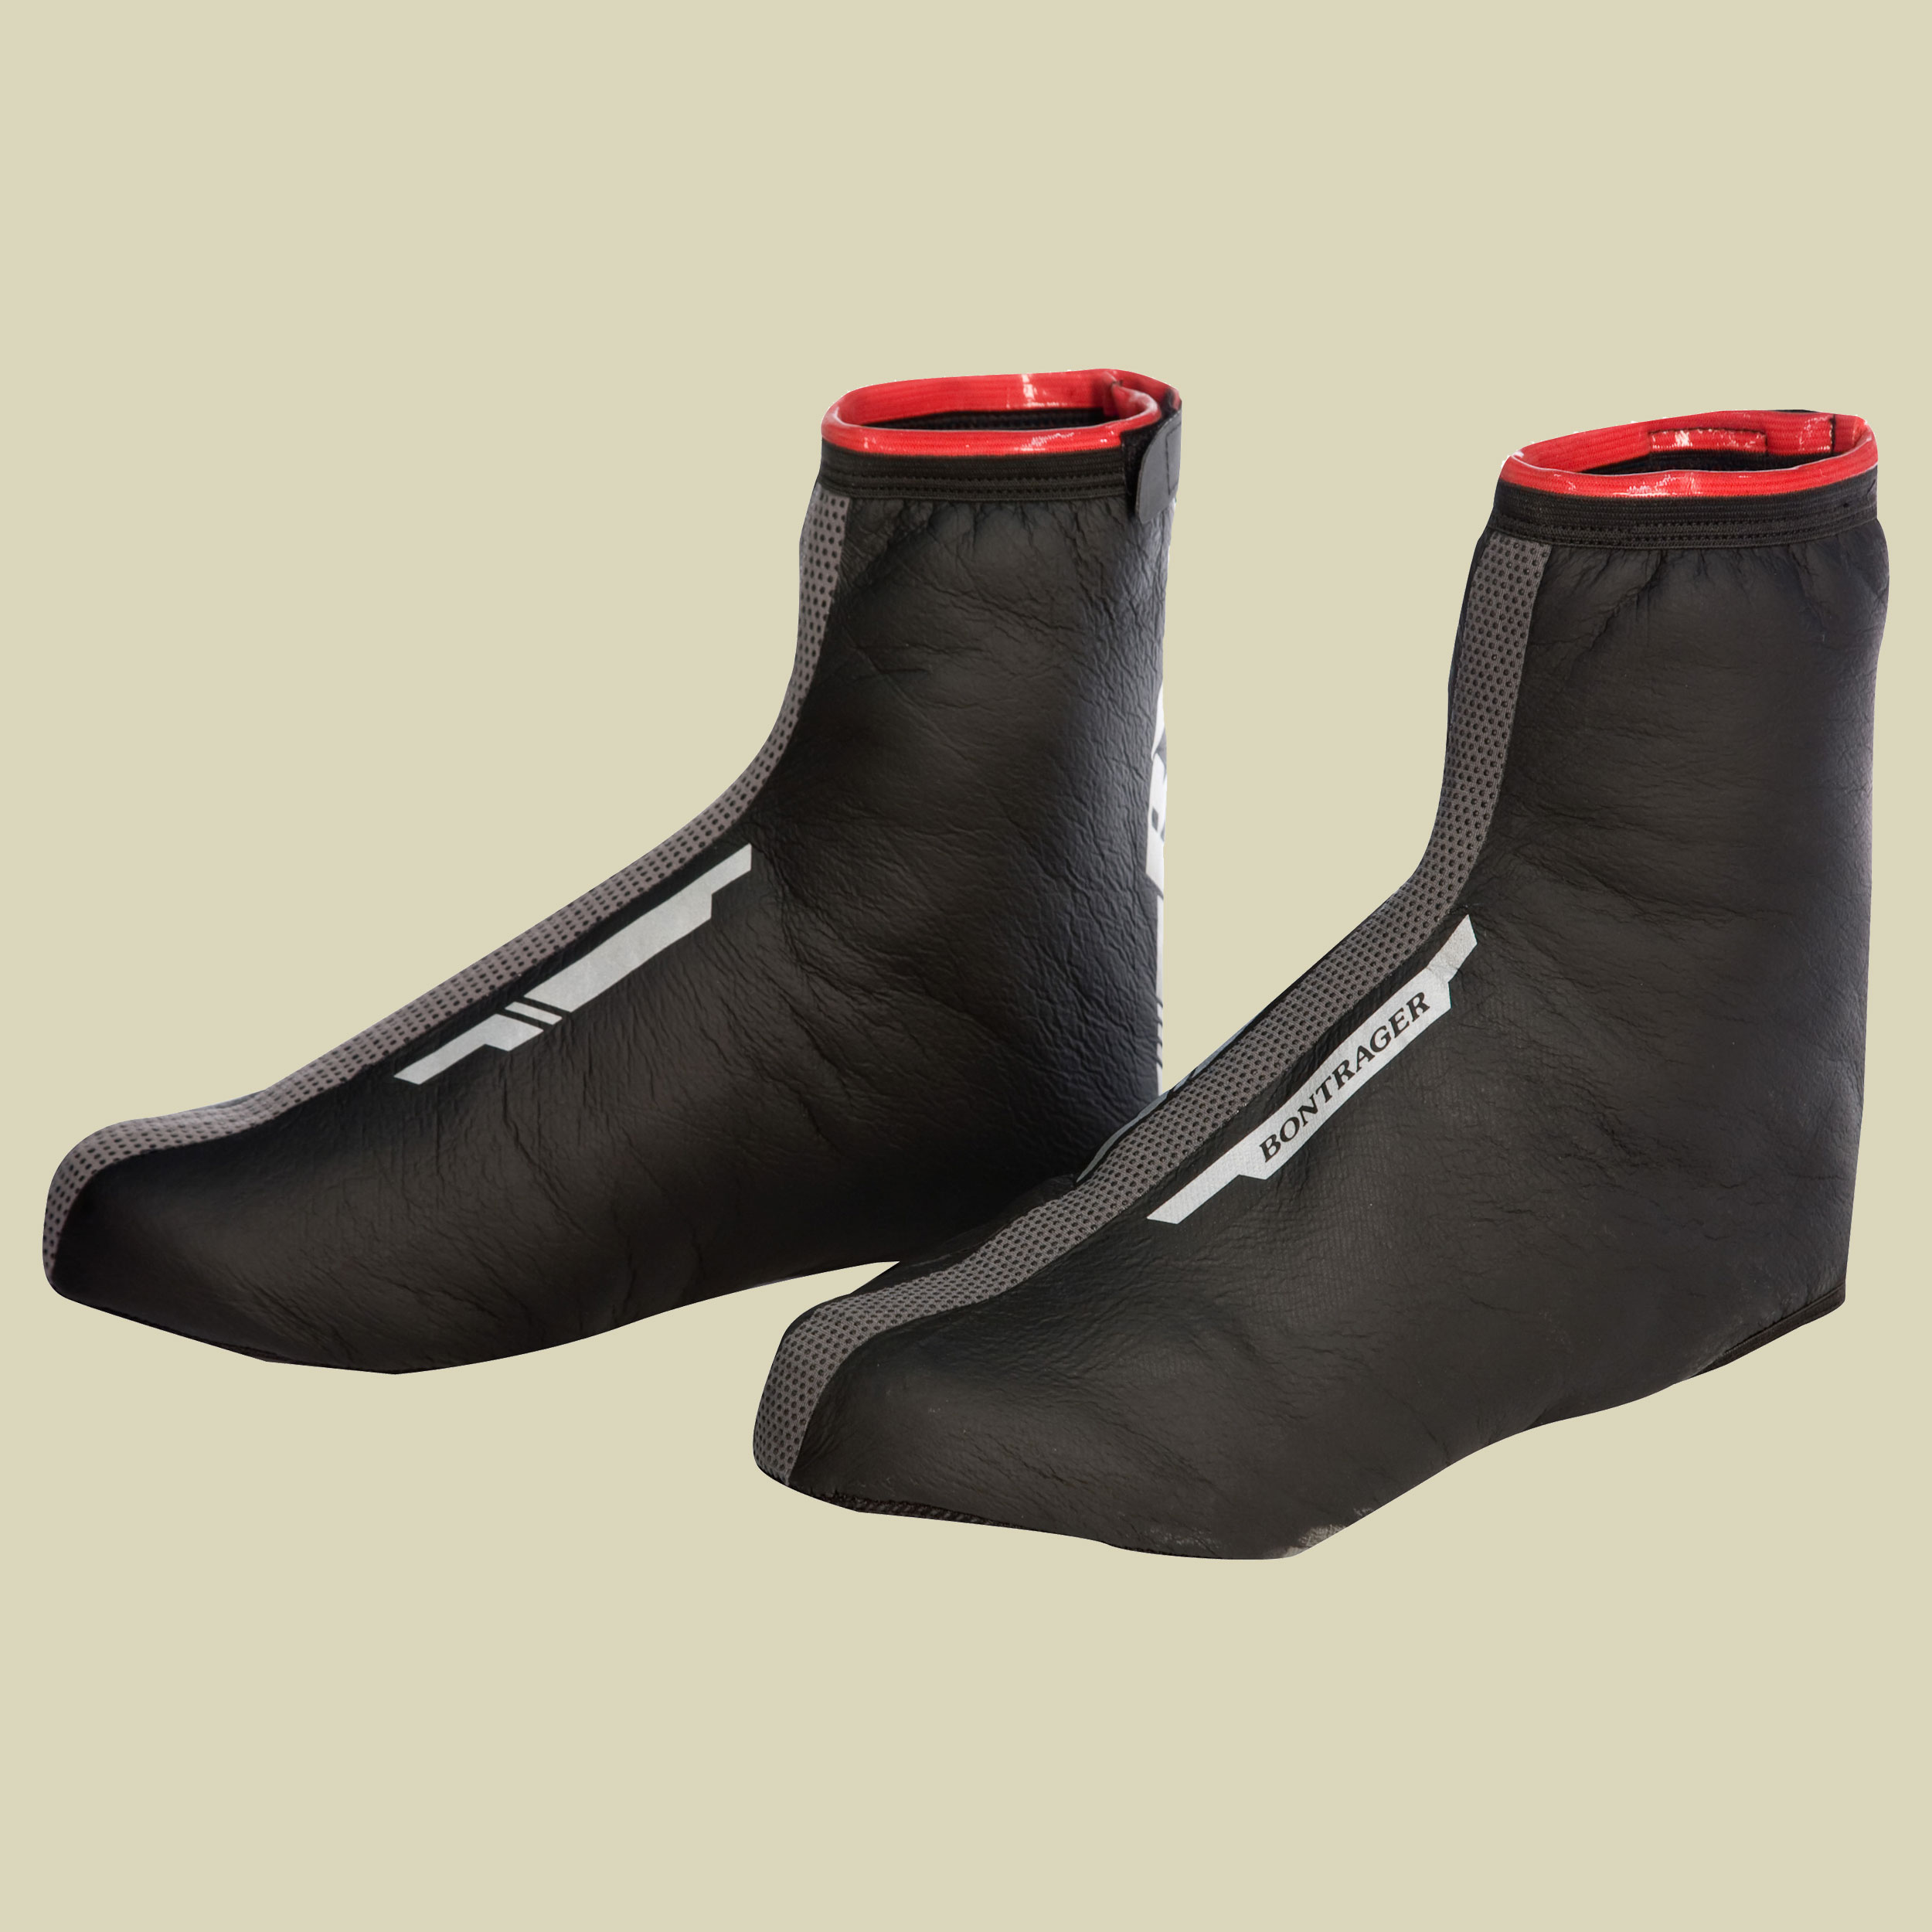 RXL Thermal Shoe Cover Größe 43-44 farbe black